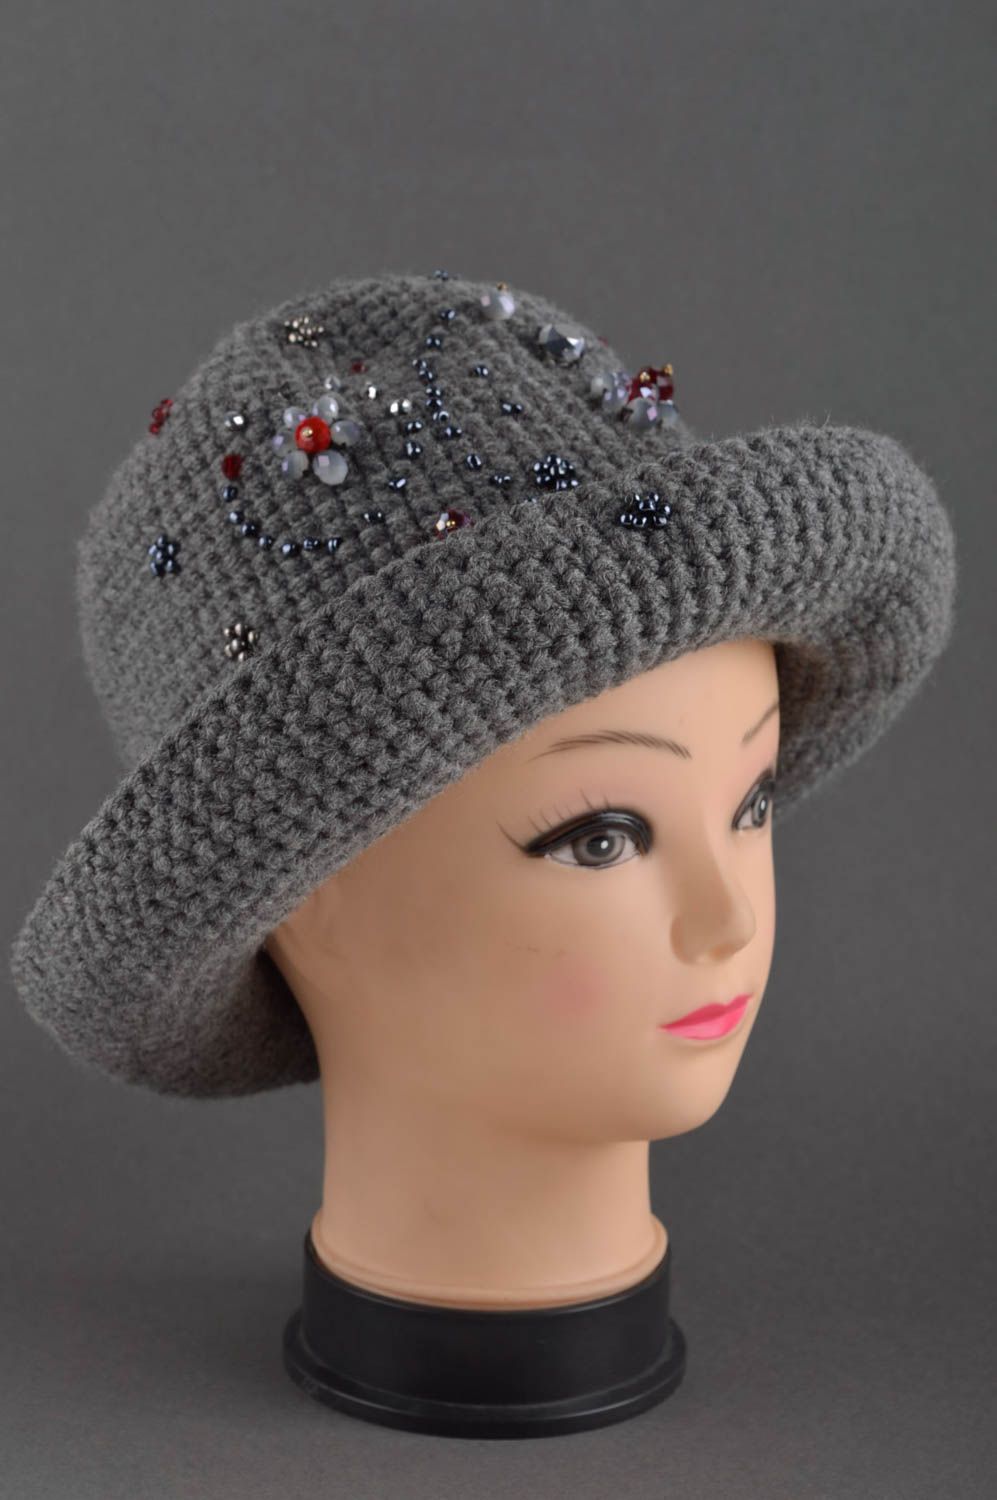 Handmade accessories for women winter hat ladies hat crochet hat gifts for women photo 1